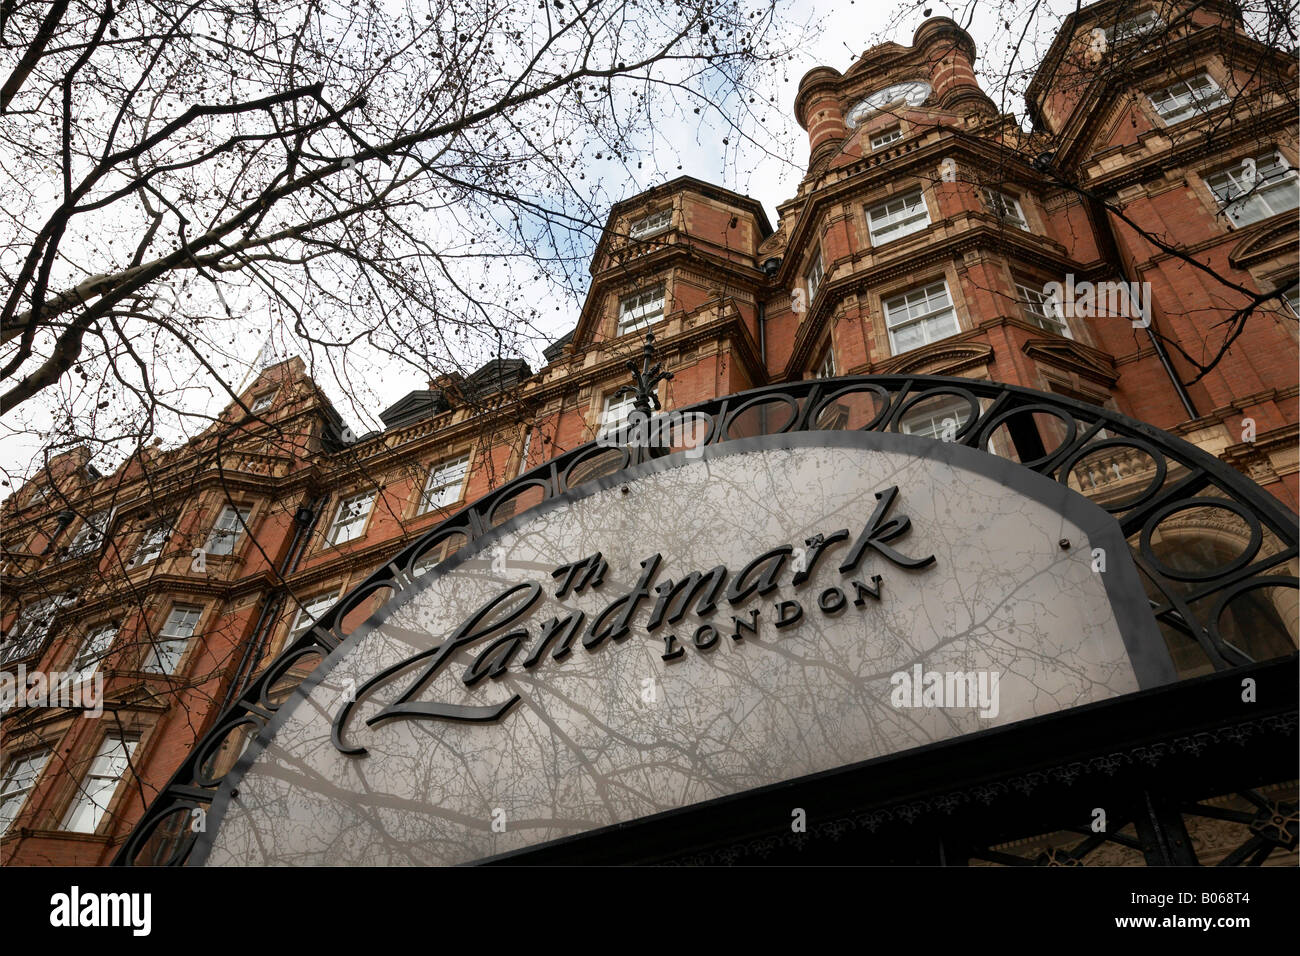 Detail of the entrance to The Landmark Hotel, London, UK Stock Photo